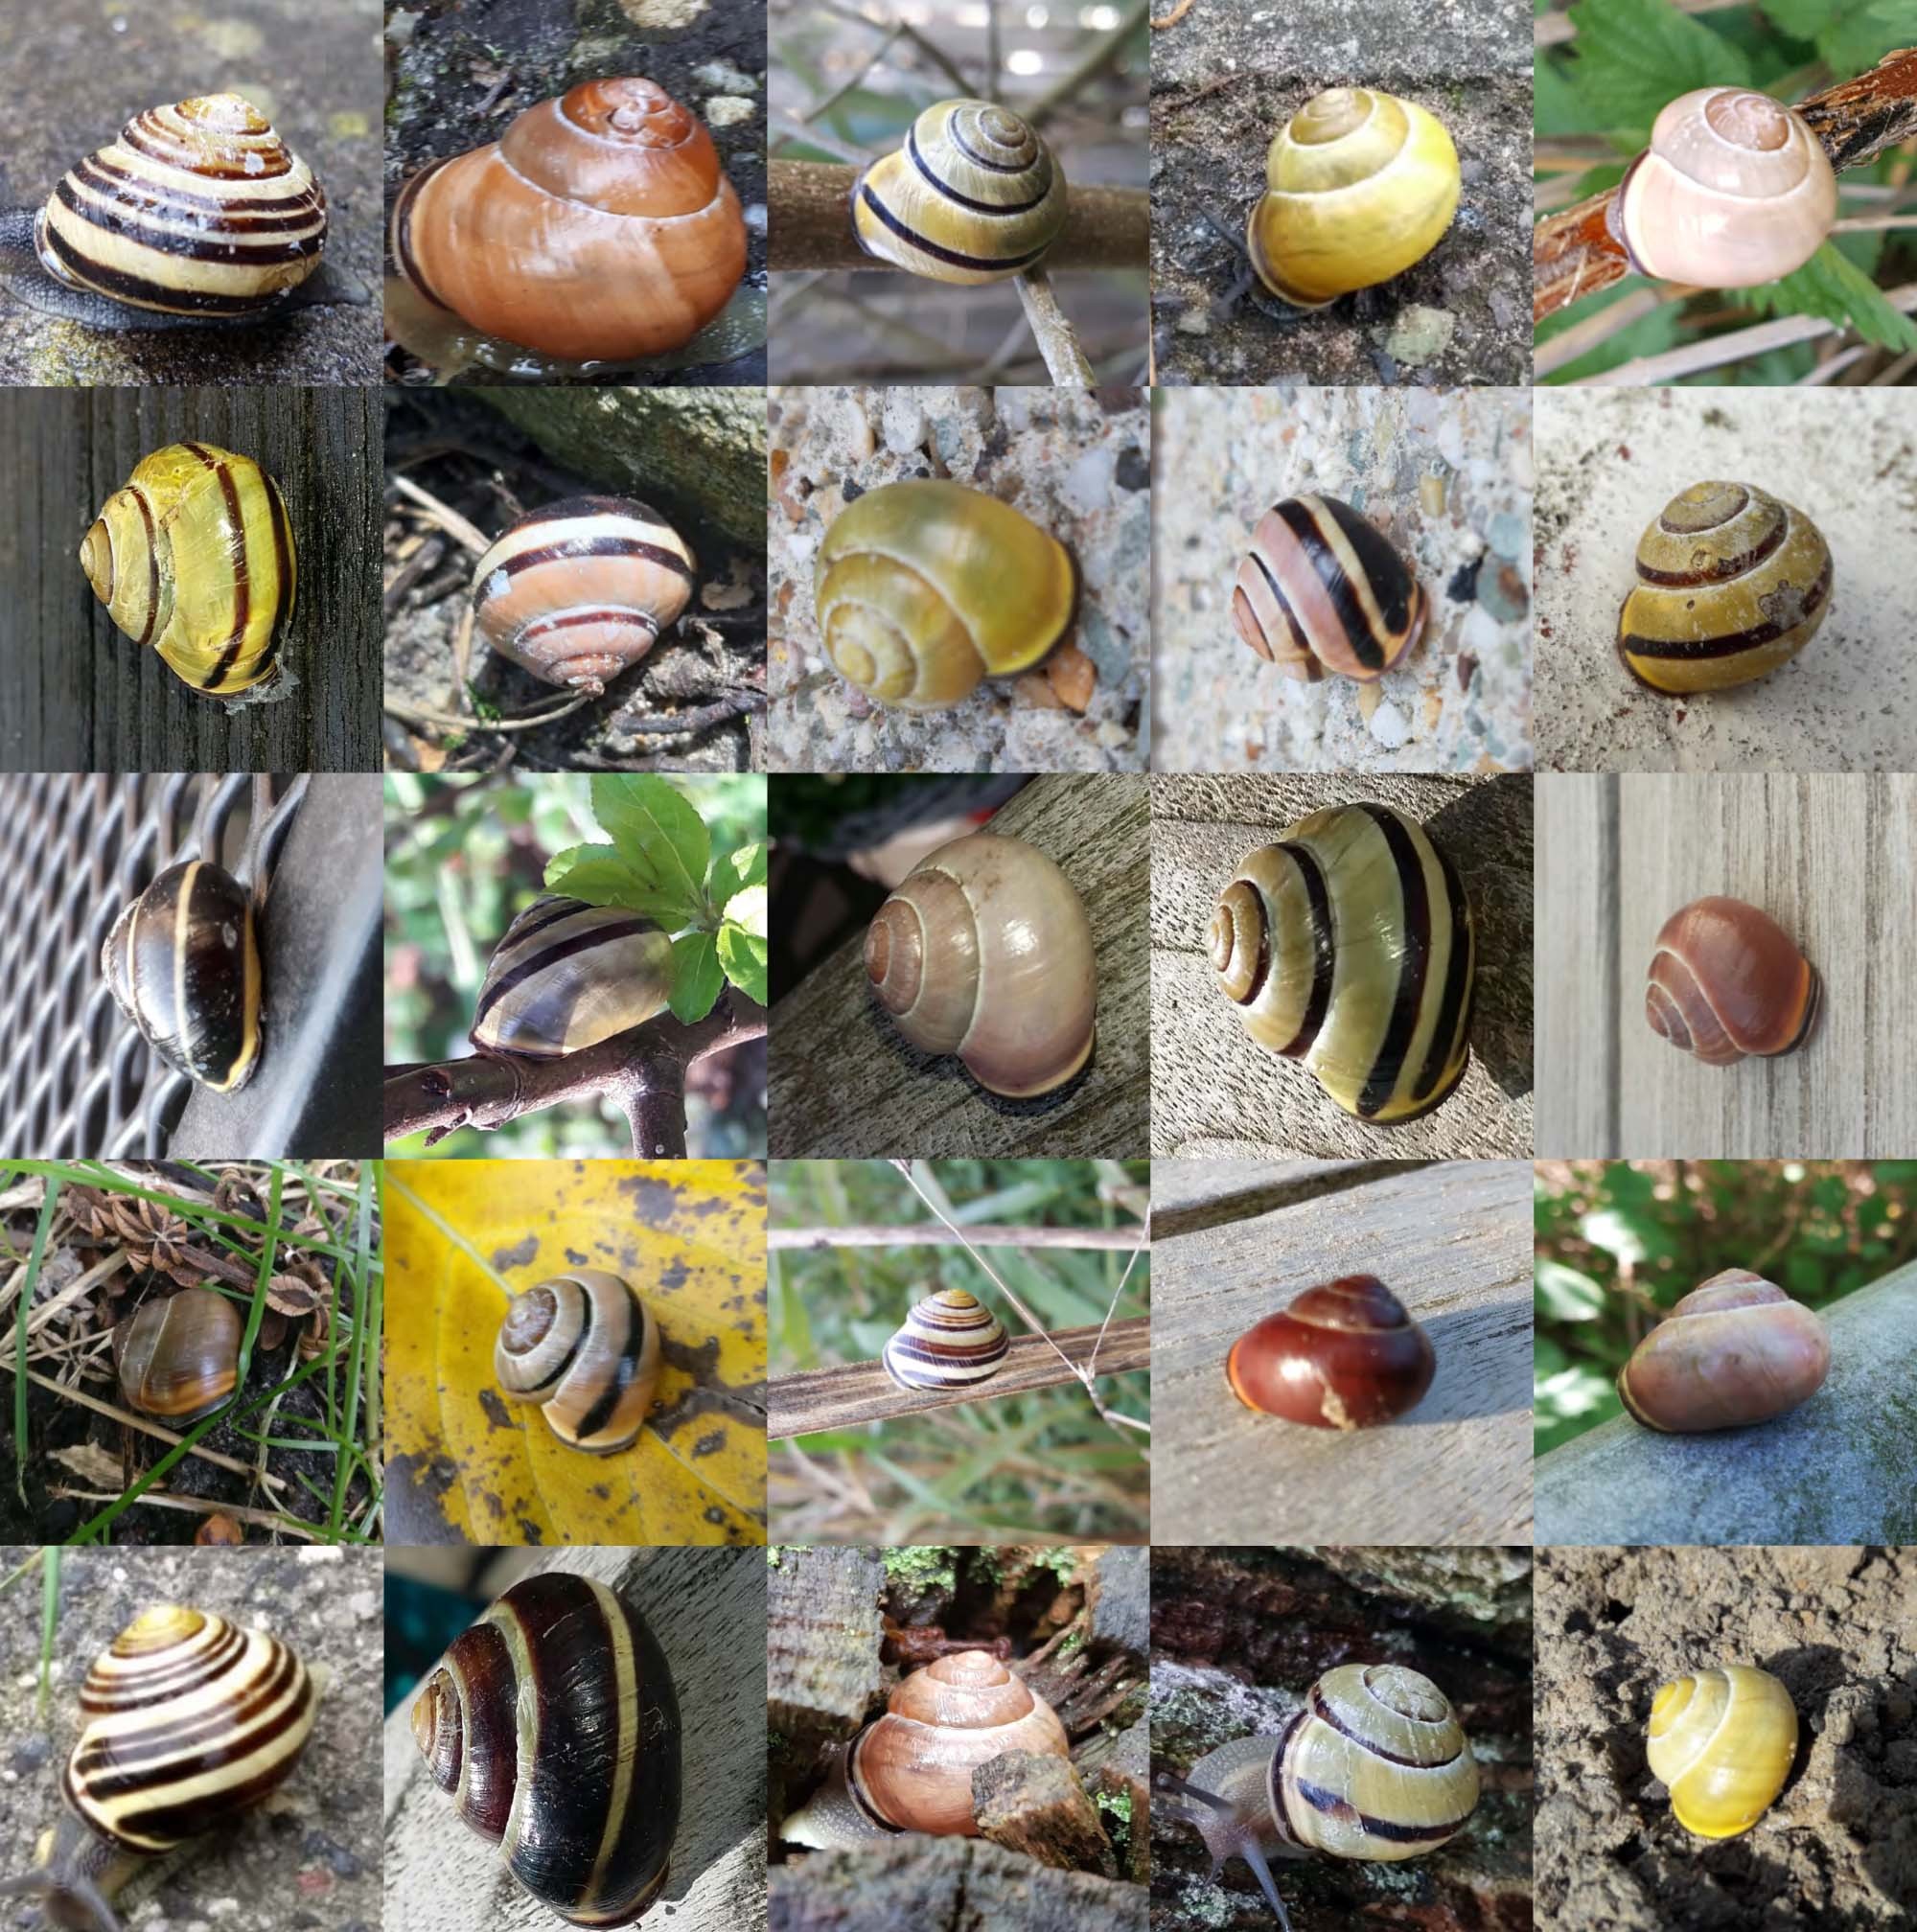 How long do snails live?